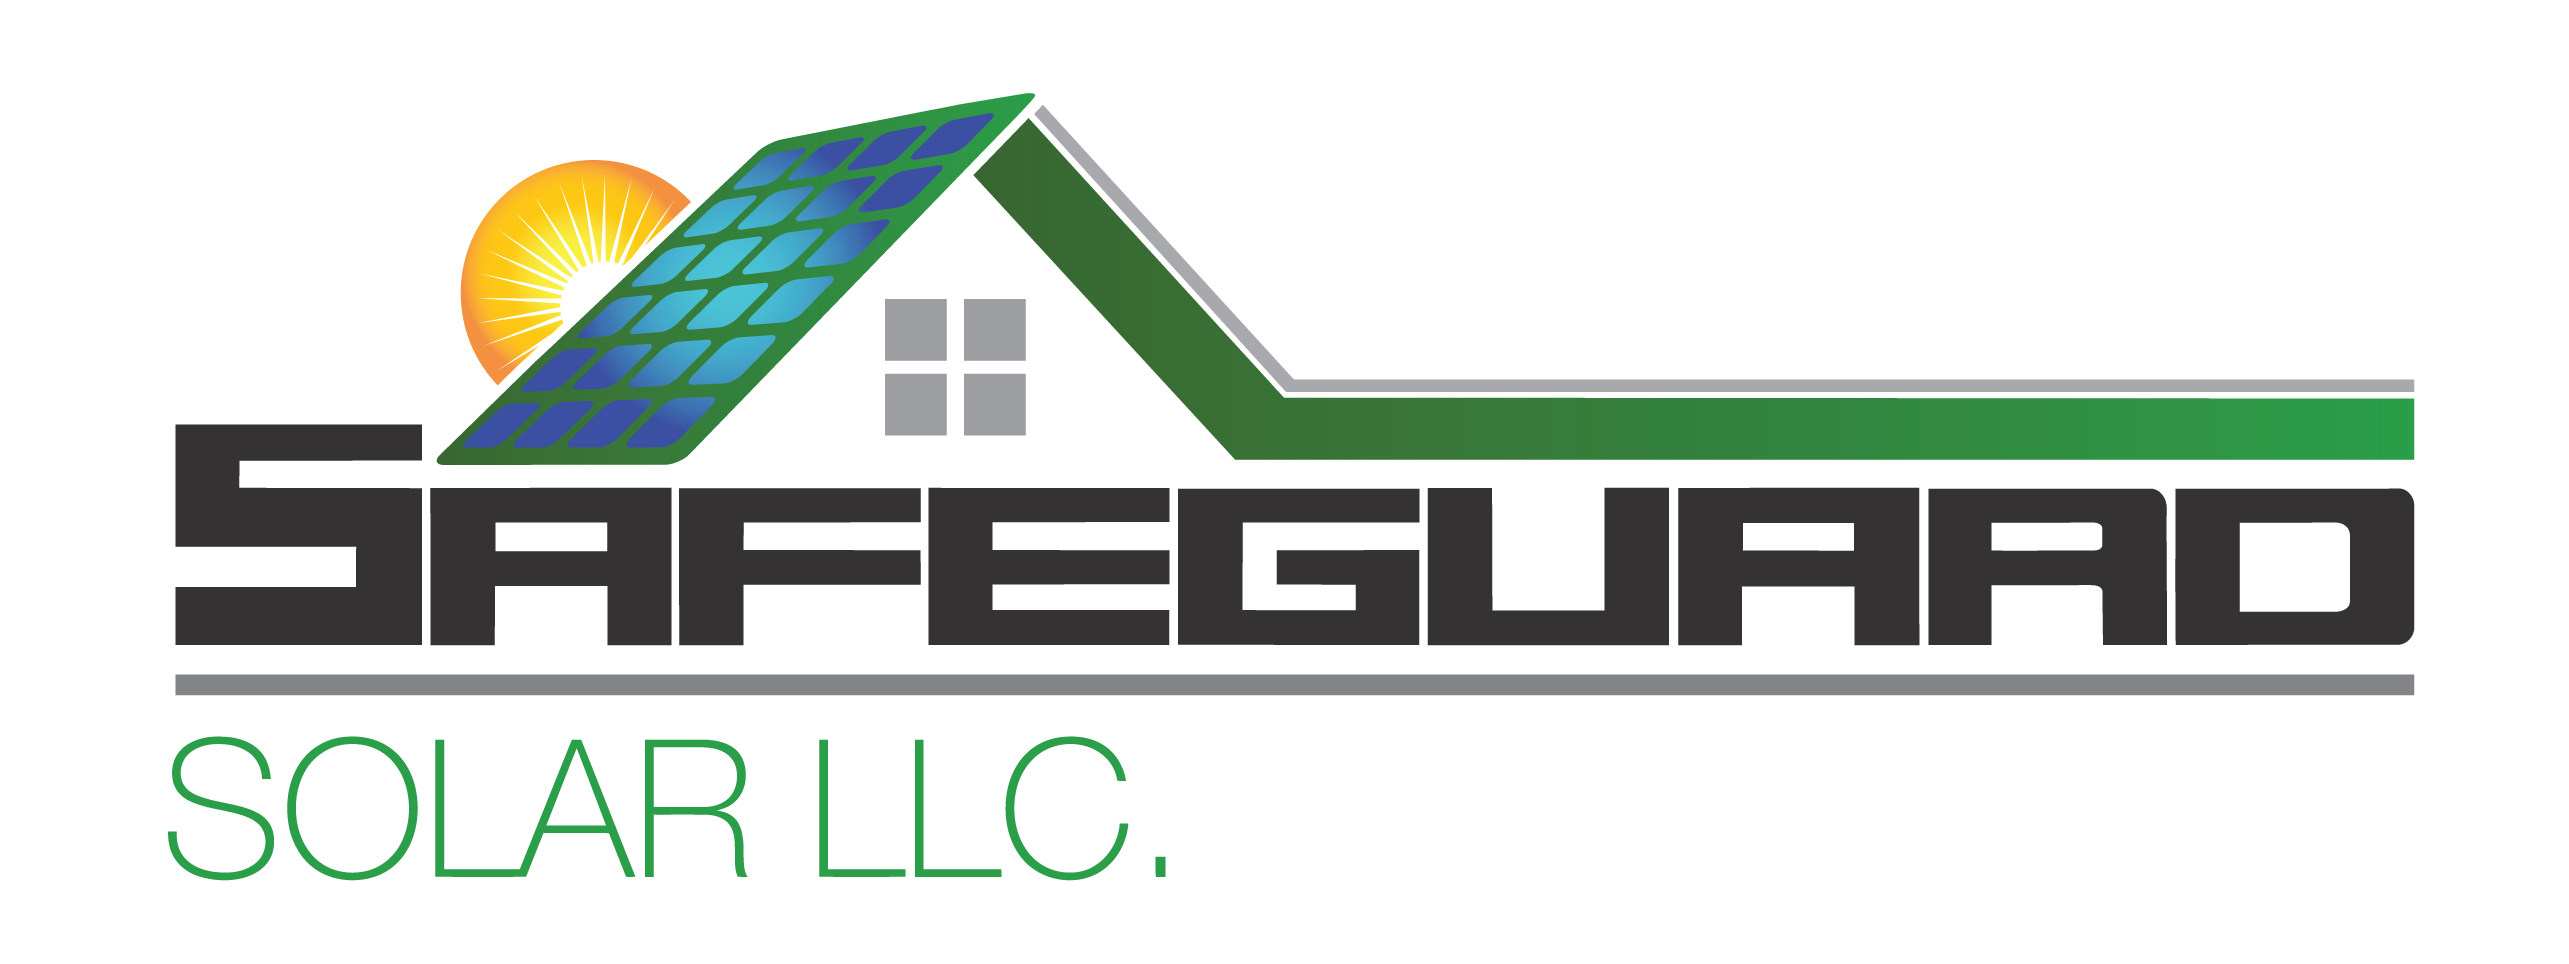 Safeguard Solar LLC Construction Inc.